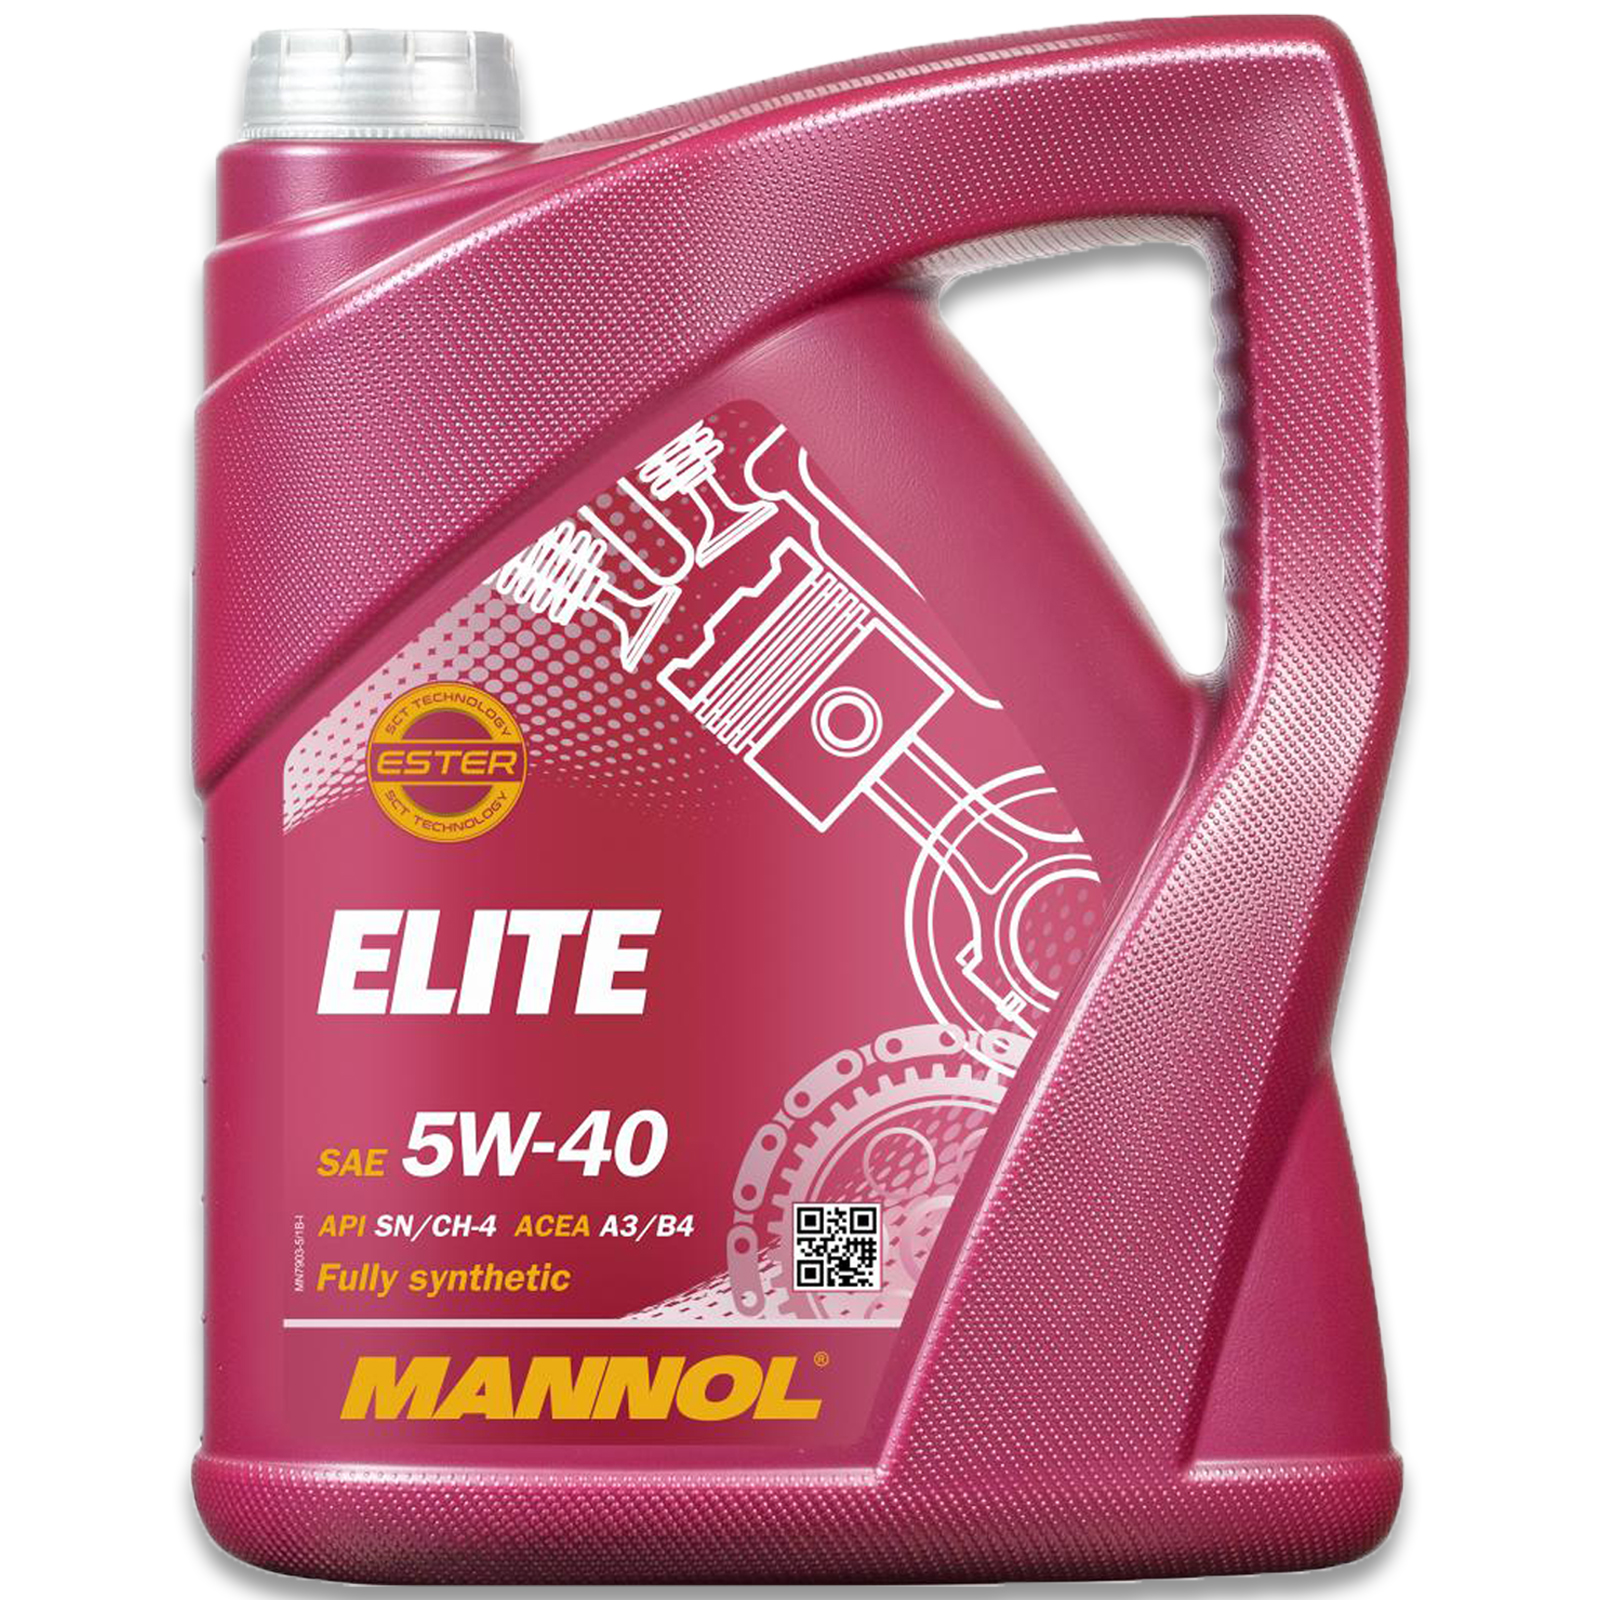 Mannol Elite 5W-40 5L